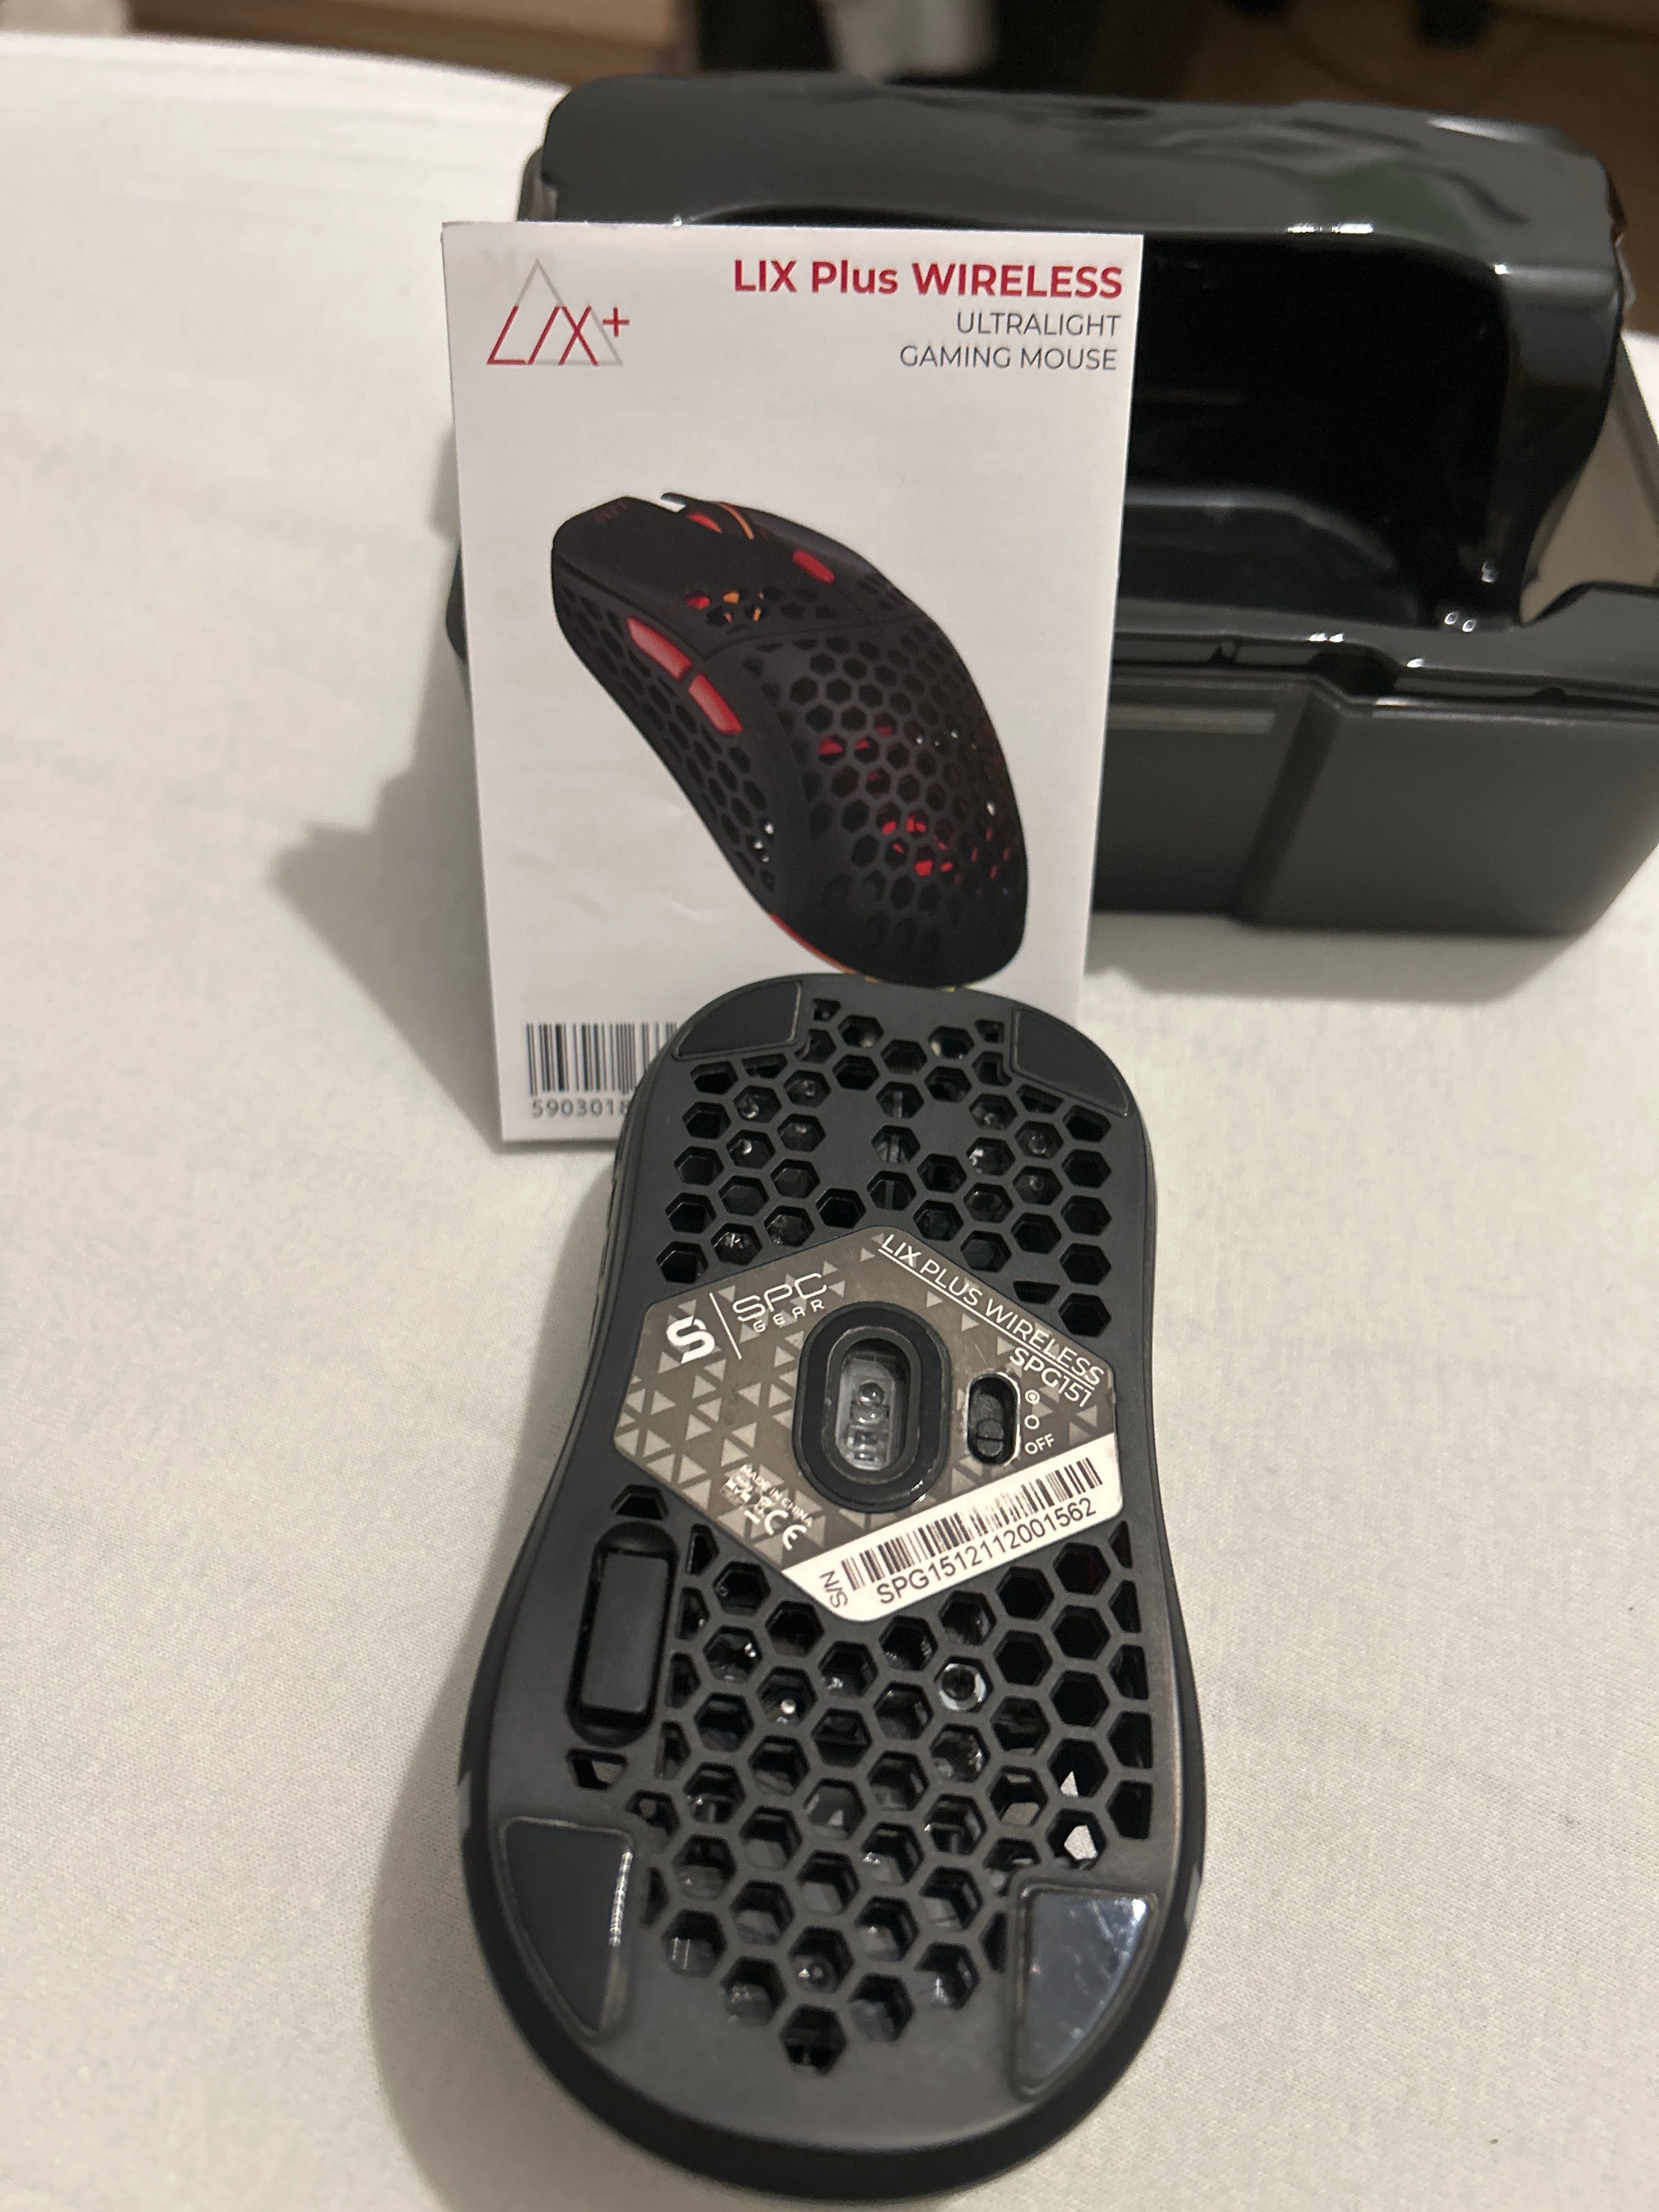 Myszka  Lix  Plus Wirelees ultralicht gaming mouse na gwarancji